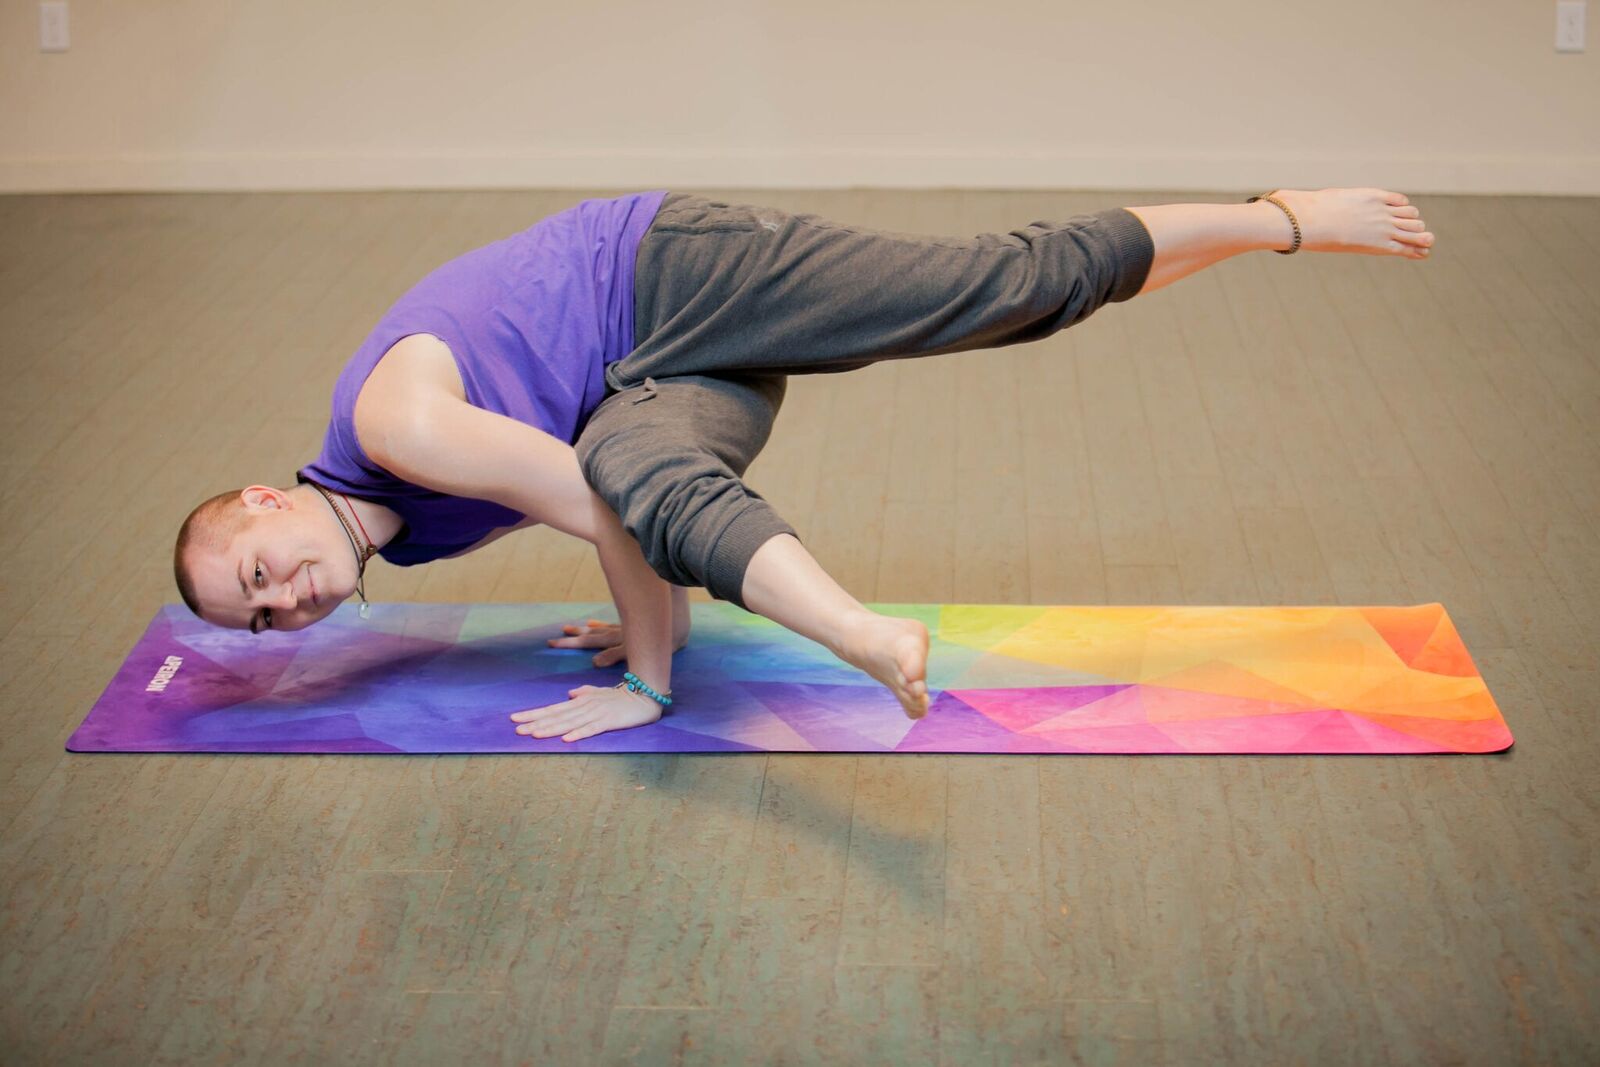 Zero Fox Given Yoga Mat - Practice Yoga In Style [Gift Idea / Fun Present]  Exercise Mat / Cute Animal Yoga Mat / Green Yoga Mat